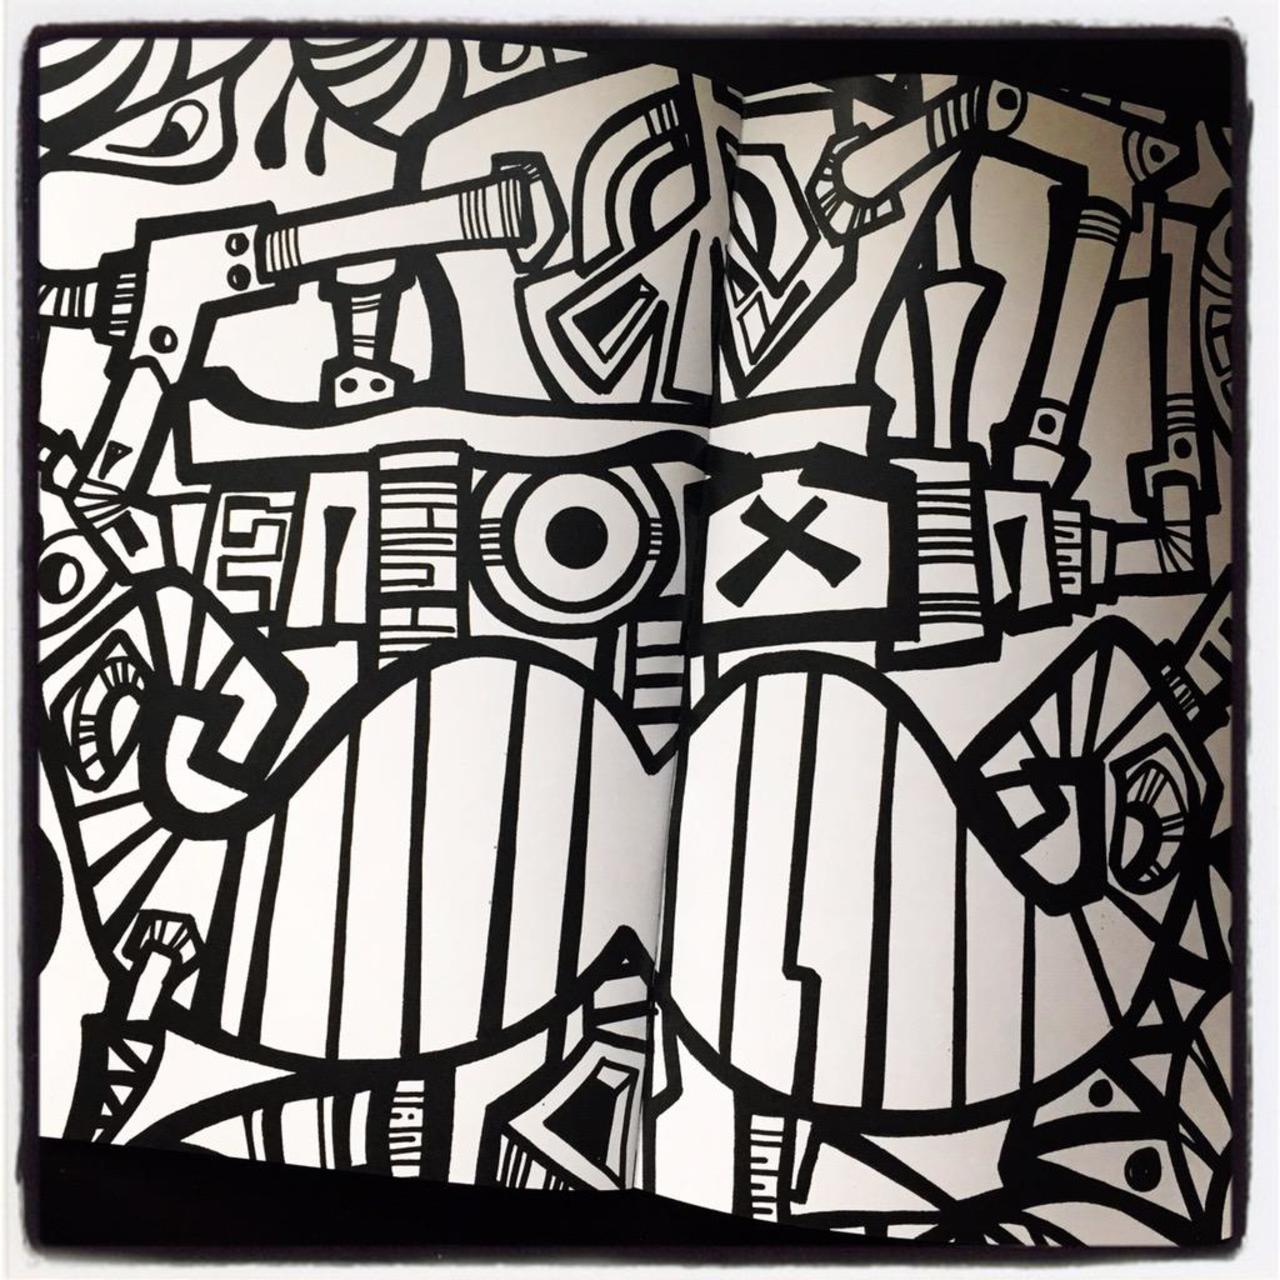 #clunkydoodles #brochure #mockup #doodle #picoftheday #popart #graffiti #graffitiart #flyingmachine #DJ #streetart http://t.co/kO2KaZwMmp